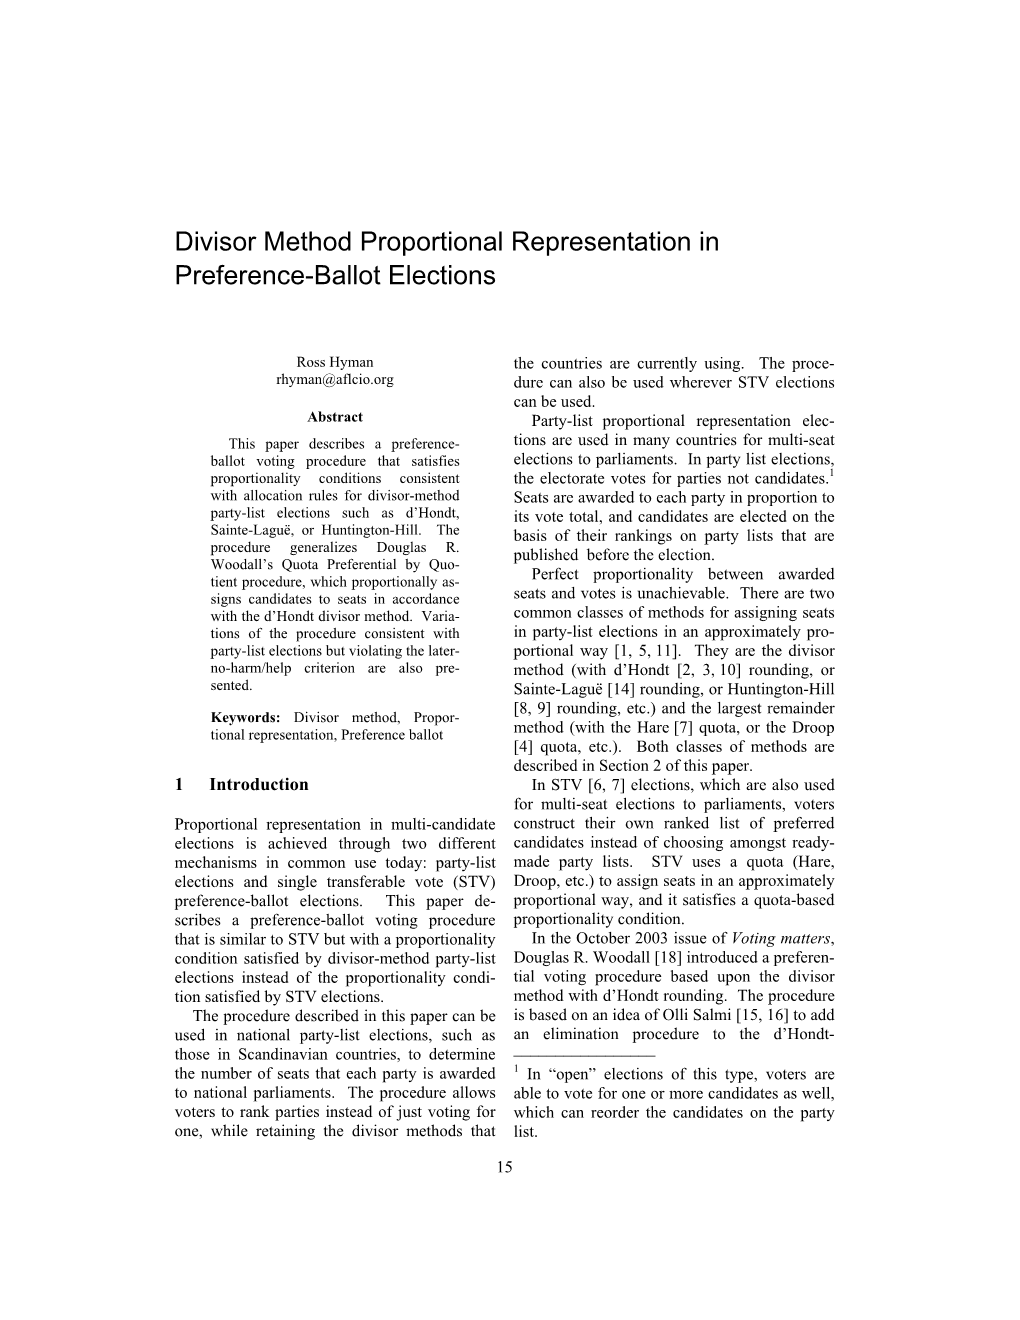 Divisor Method Proportional Representation in Preference-Ballot Elections